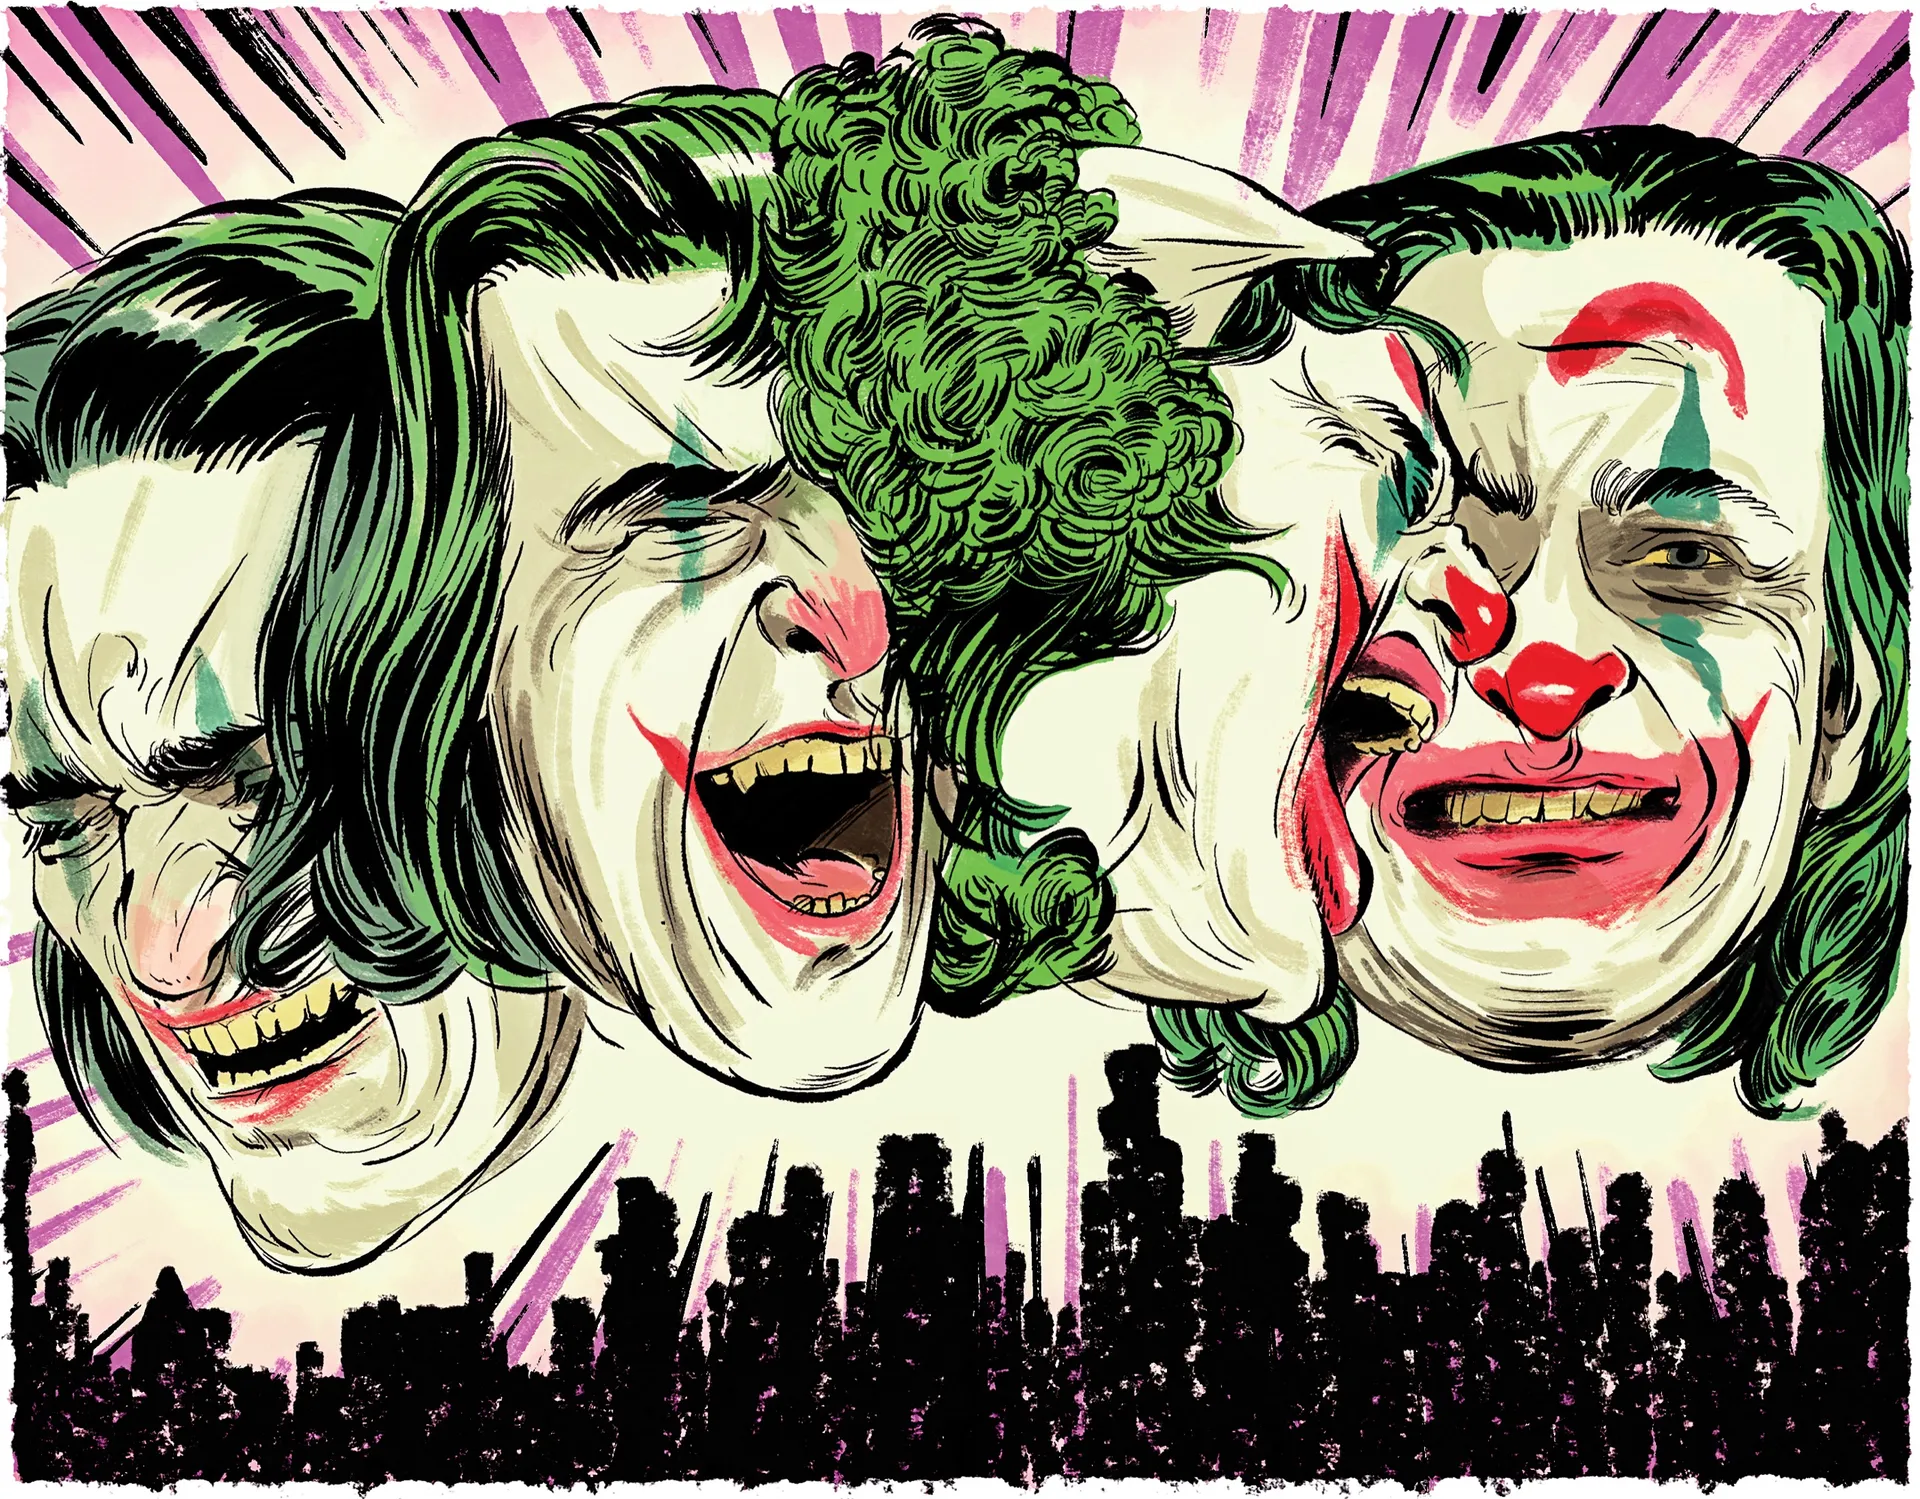 Todd Phillips's "Joker" is no laughing matter